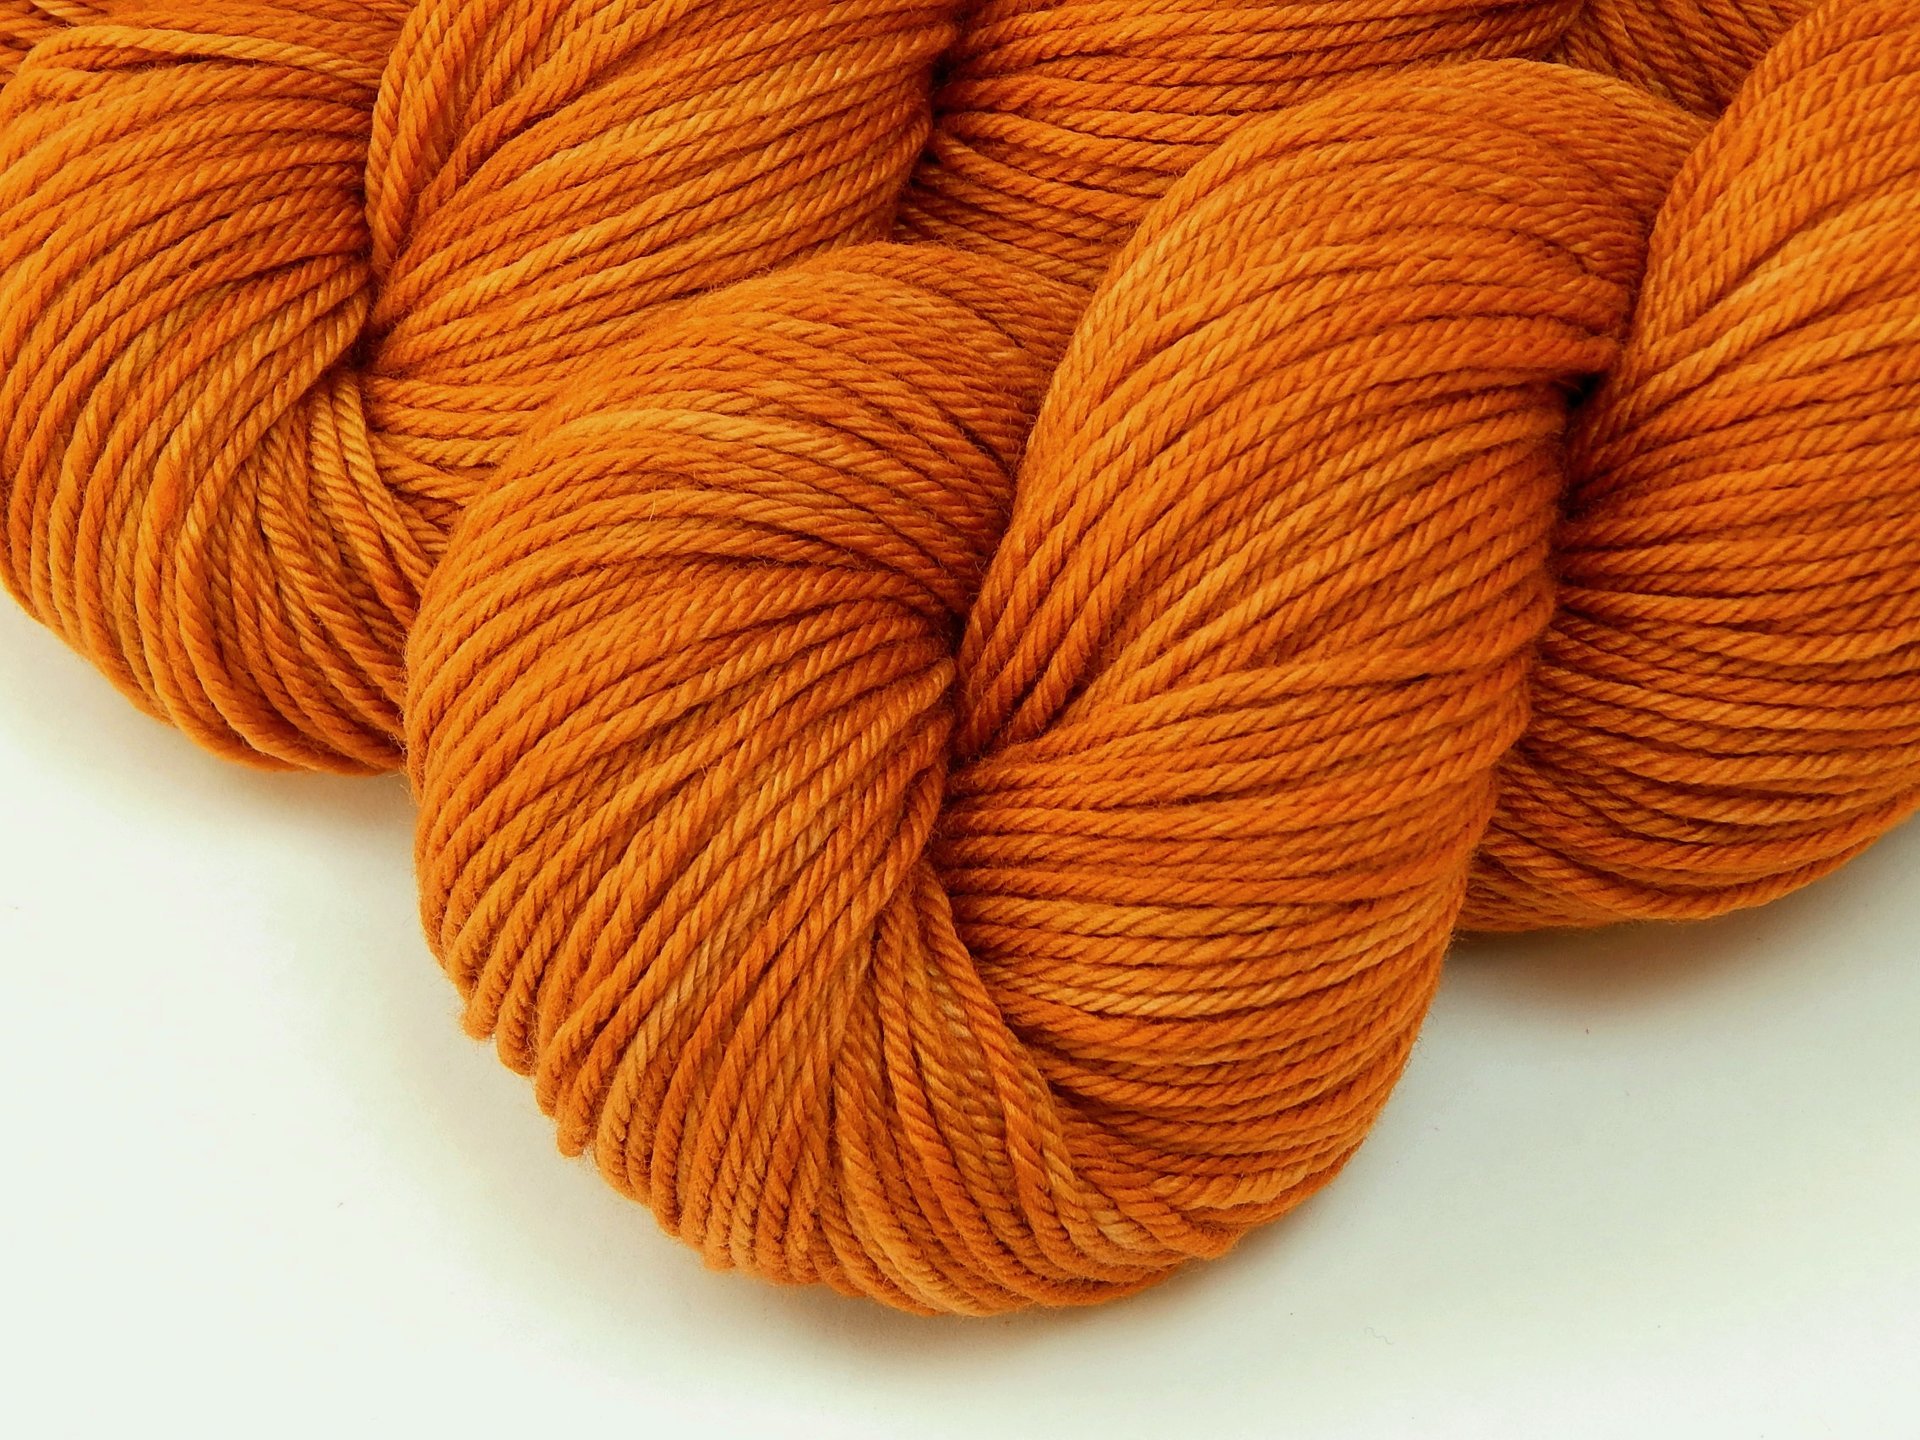 Worsted Weight Hand Dyed Yarn, Superwash 100% Merino Wool - Copper - Indie Dyed Semi Solid Orange Knitting Yarn, Fall Autumn Craft Supply